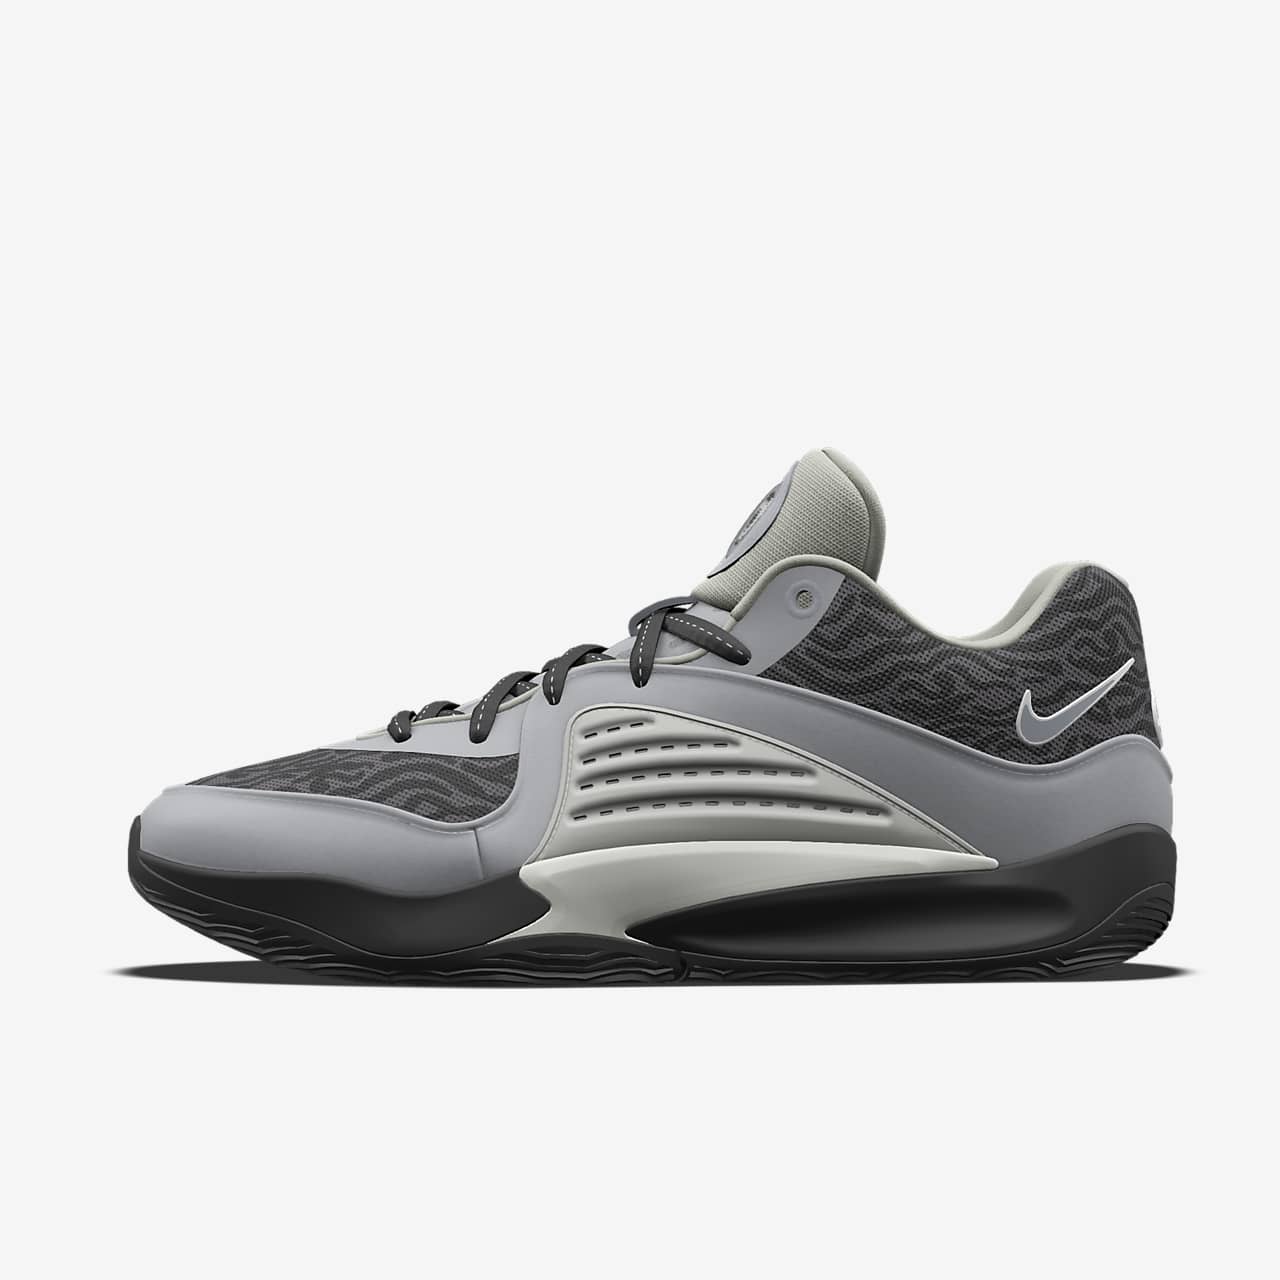 KD16 By You Custom Basketball Shoes